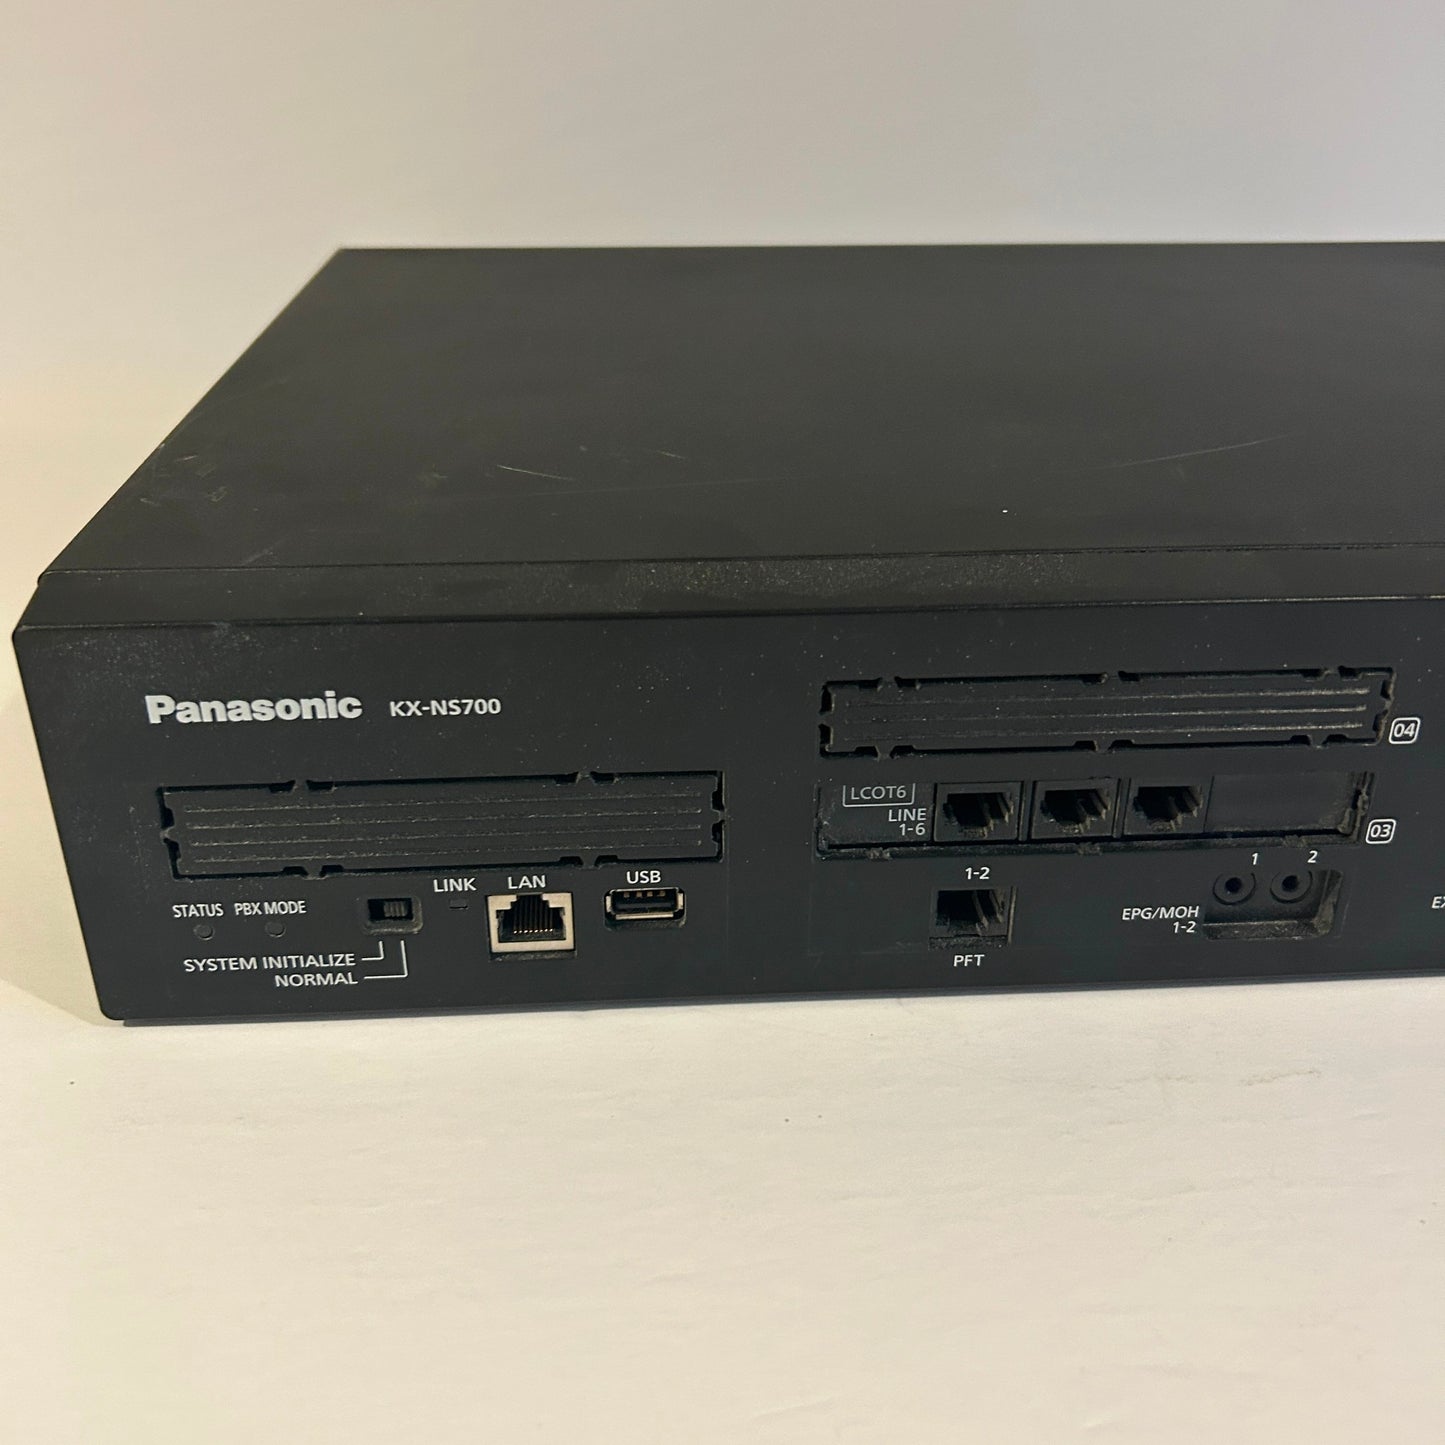 Panasonic IP PBX Compact Hybrid Communication Platform - KX-NS700